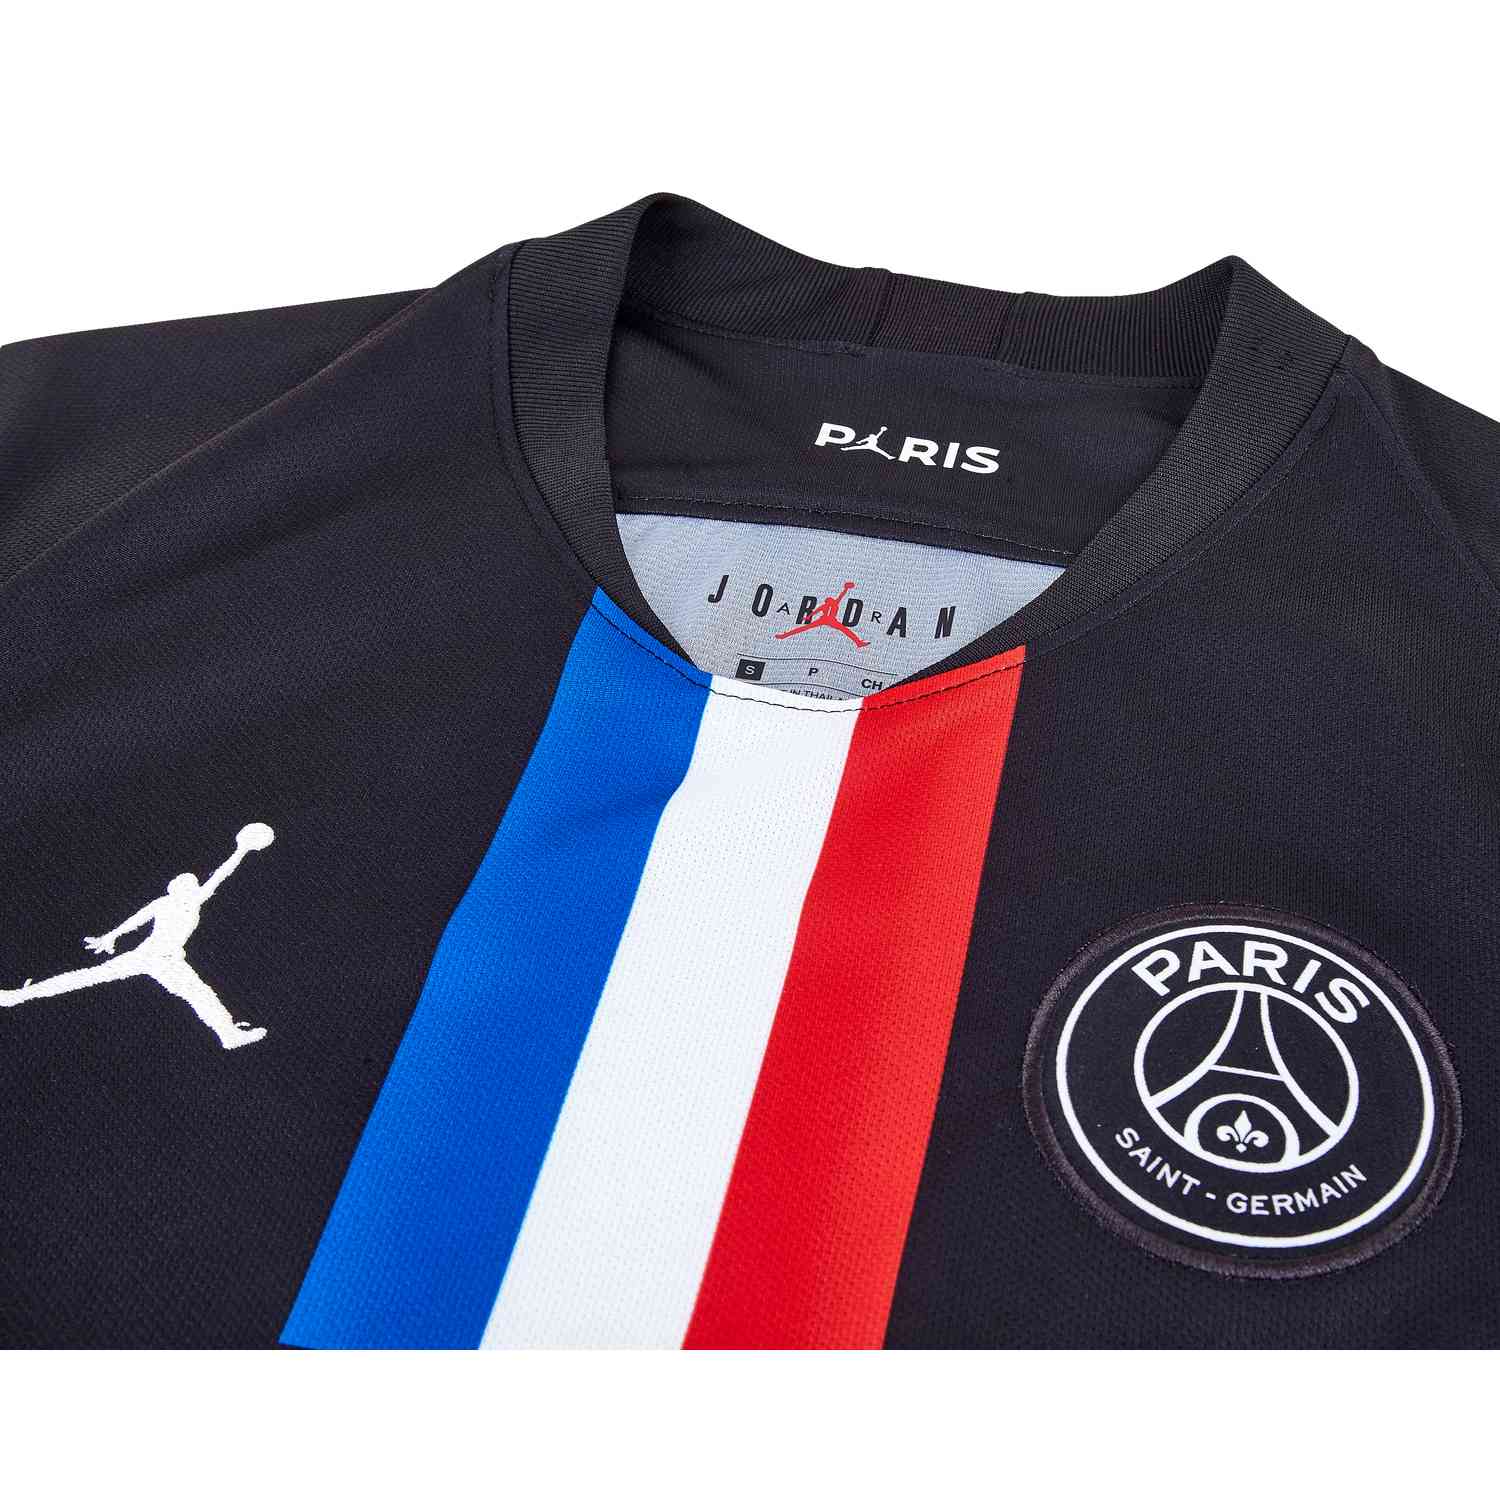 NIKE PARIS SAINT-GERMAIN 2020 JORDAN JERSEY BLACK - Soccer Plus